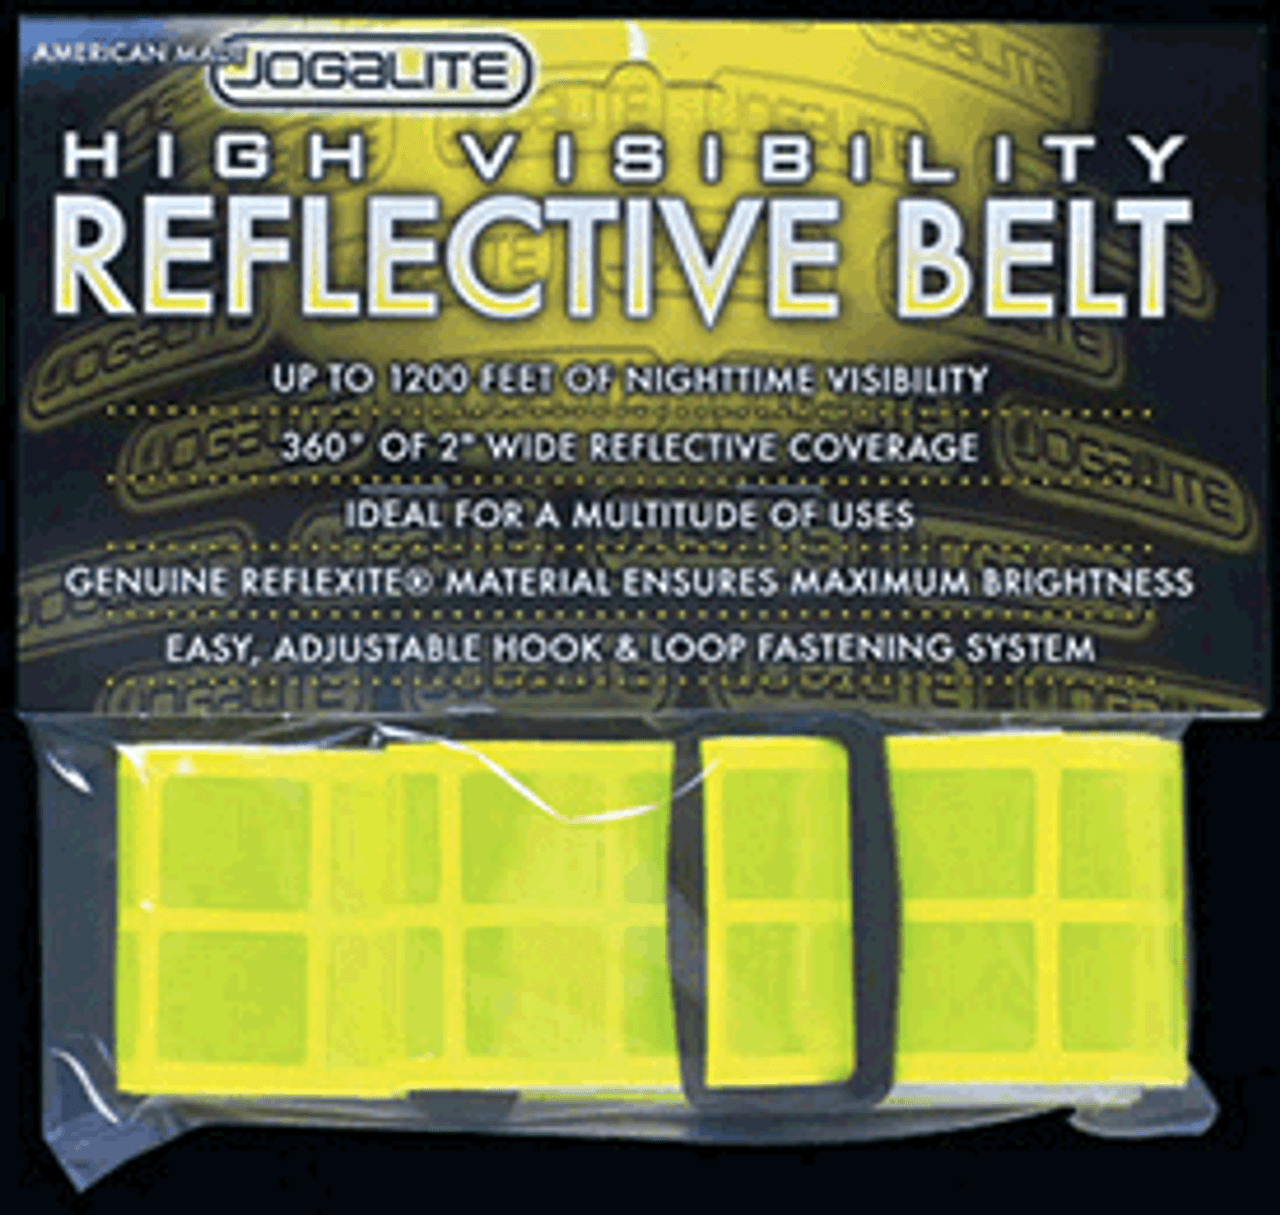 Reflective Belts - High Visibility